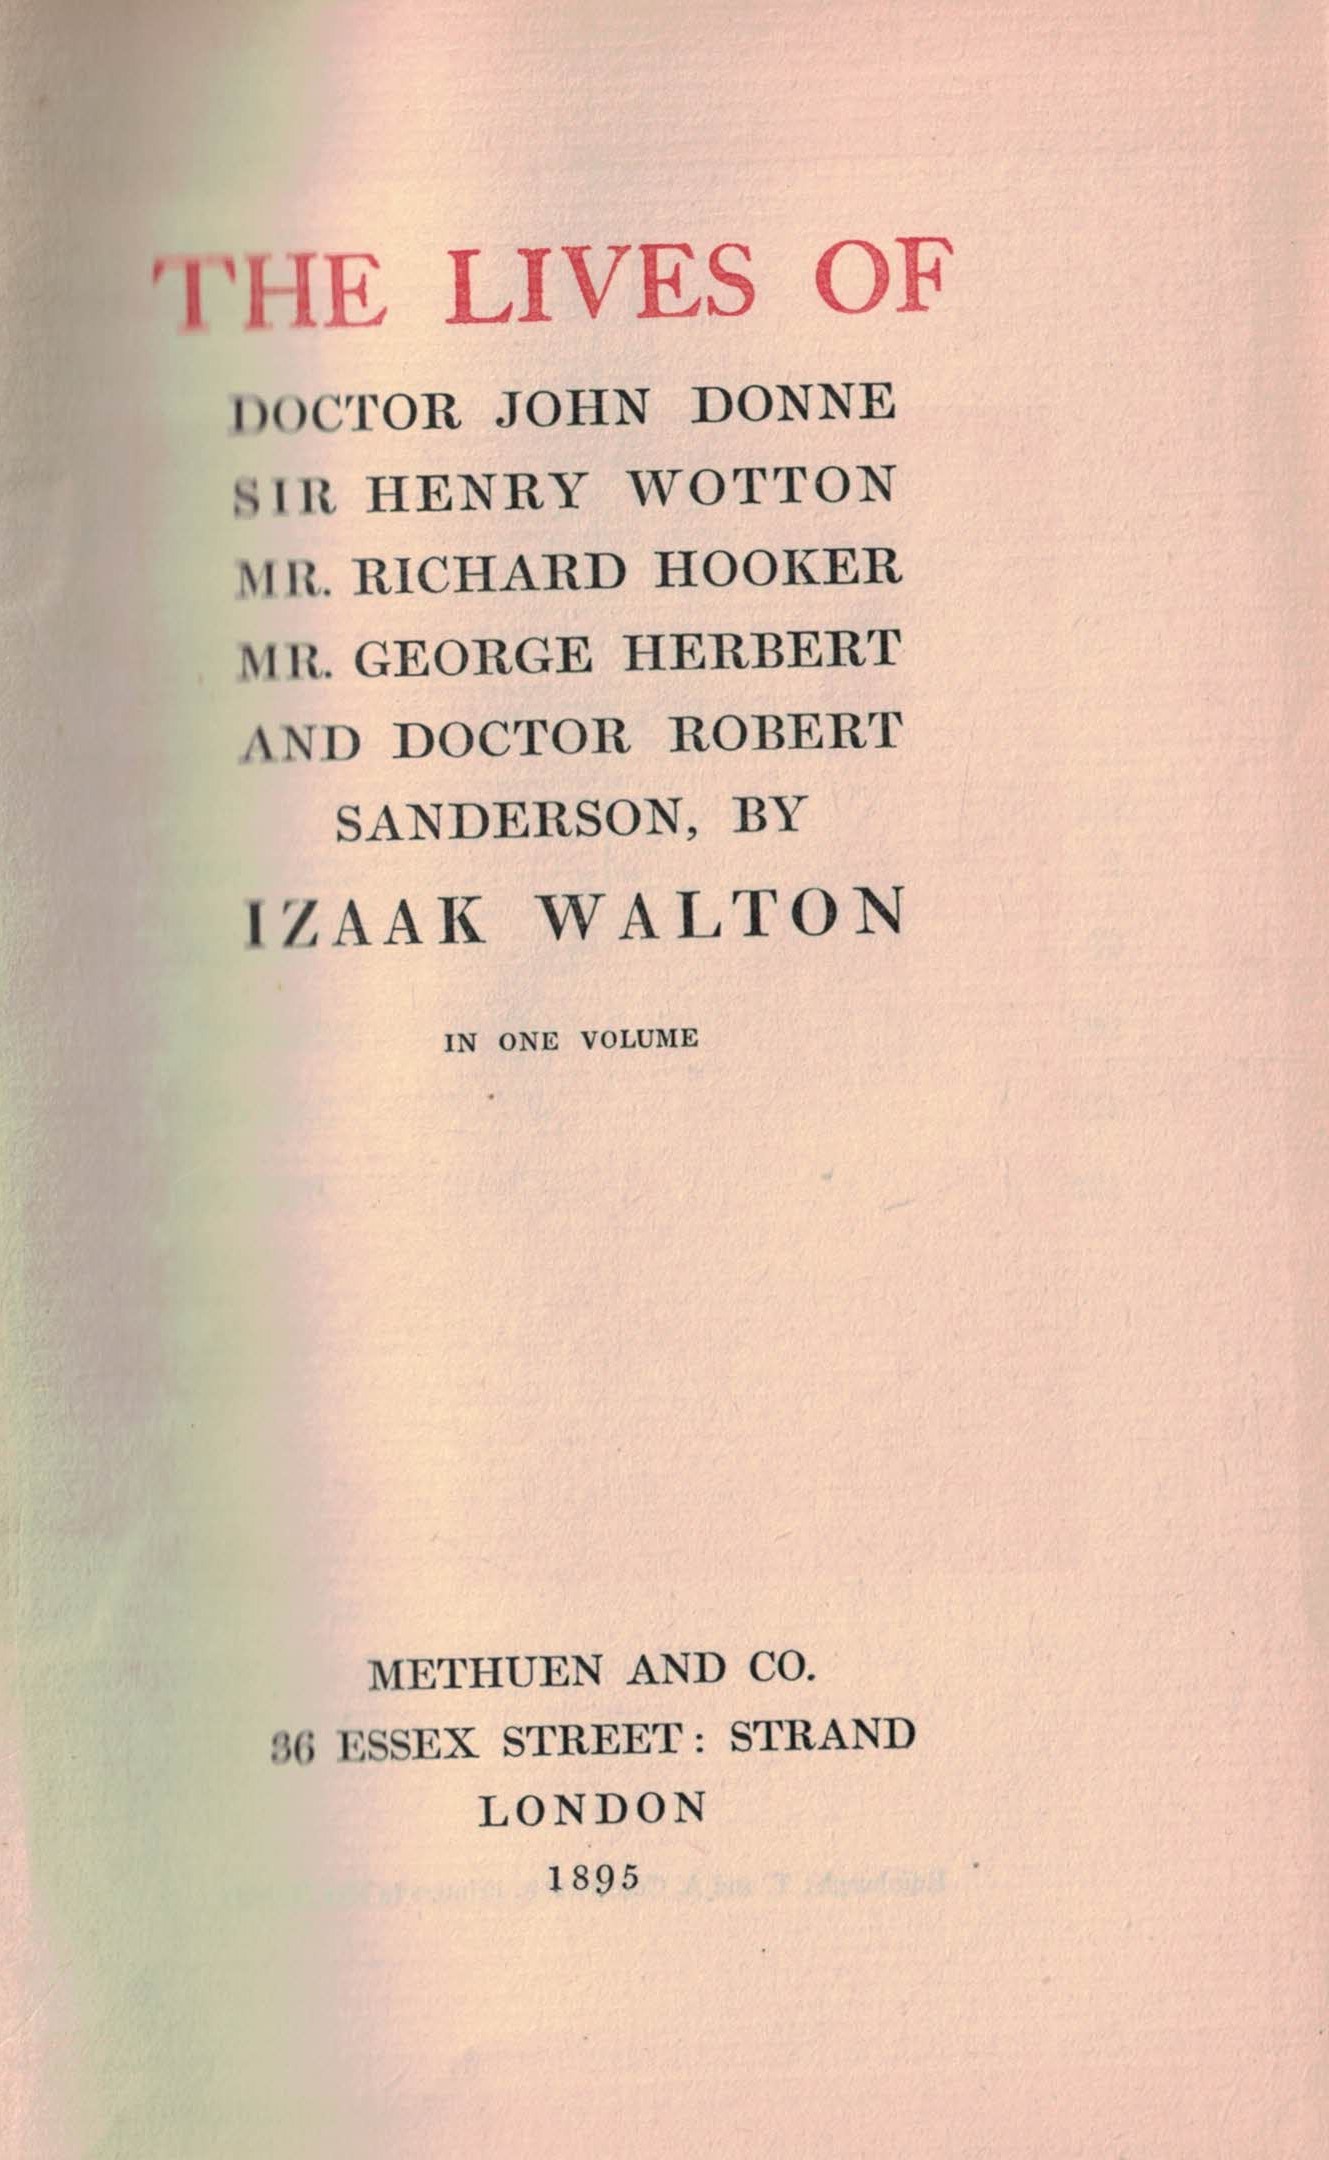 The Lives of Doctor John Donne, Sir Henry Wotton, Mr Richard Hooker, Mr George Hooker, Mr George Herbert and Doctor Robert Sanderson